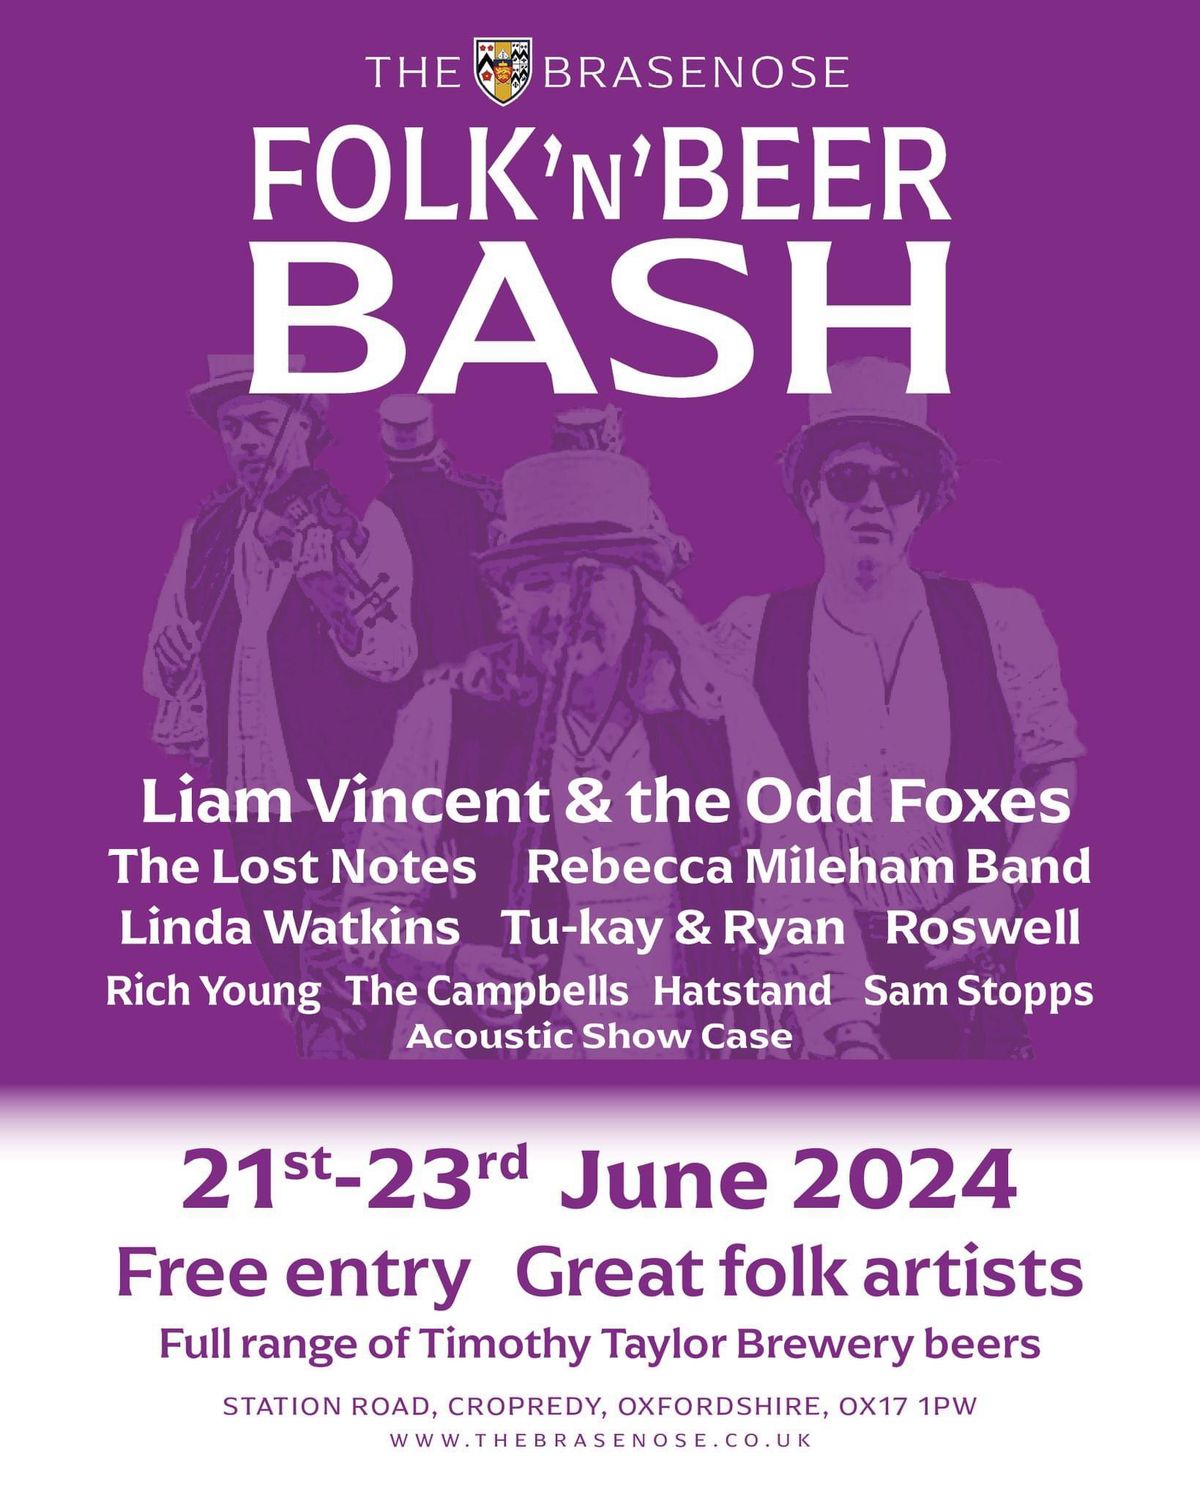 The Brasenose Folk'n'Beer Bash